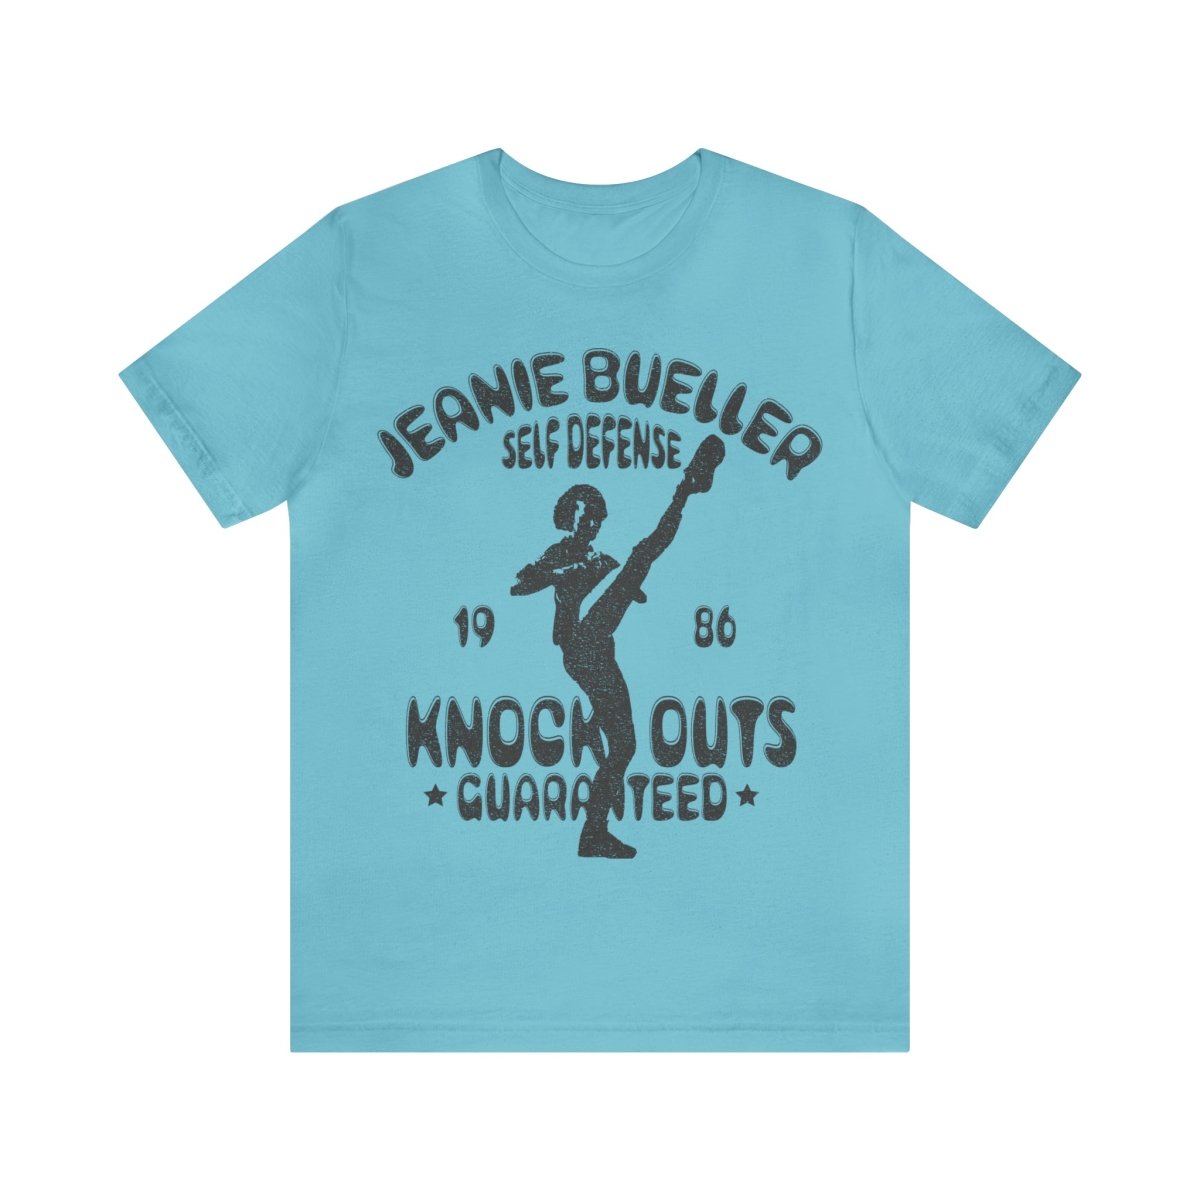 Jeanie Bueller Premium T-Shirt, Self Defense, Home Intruder, Knock Out Kick, Funny